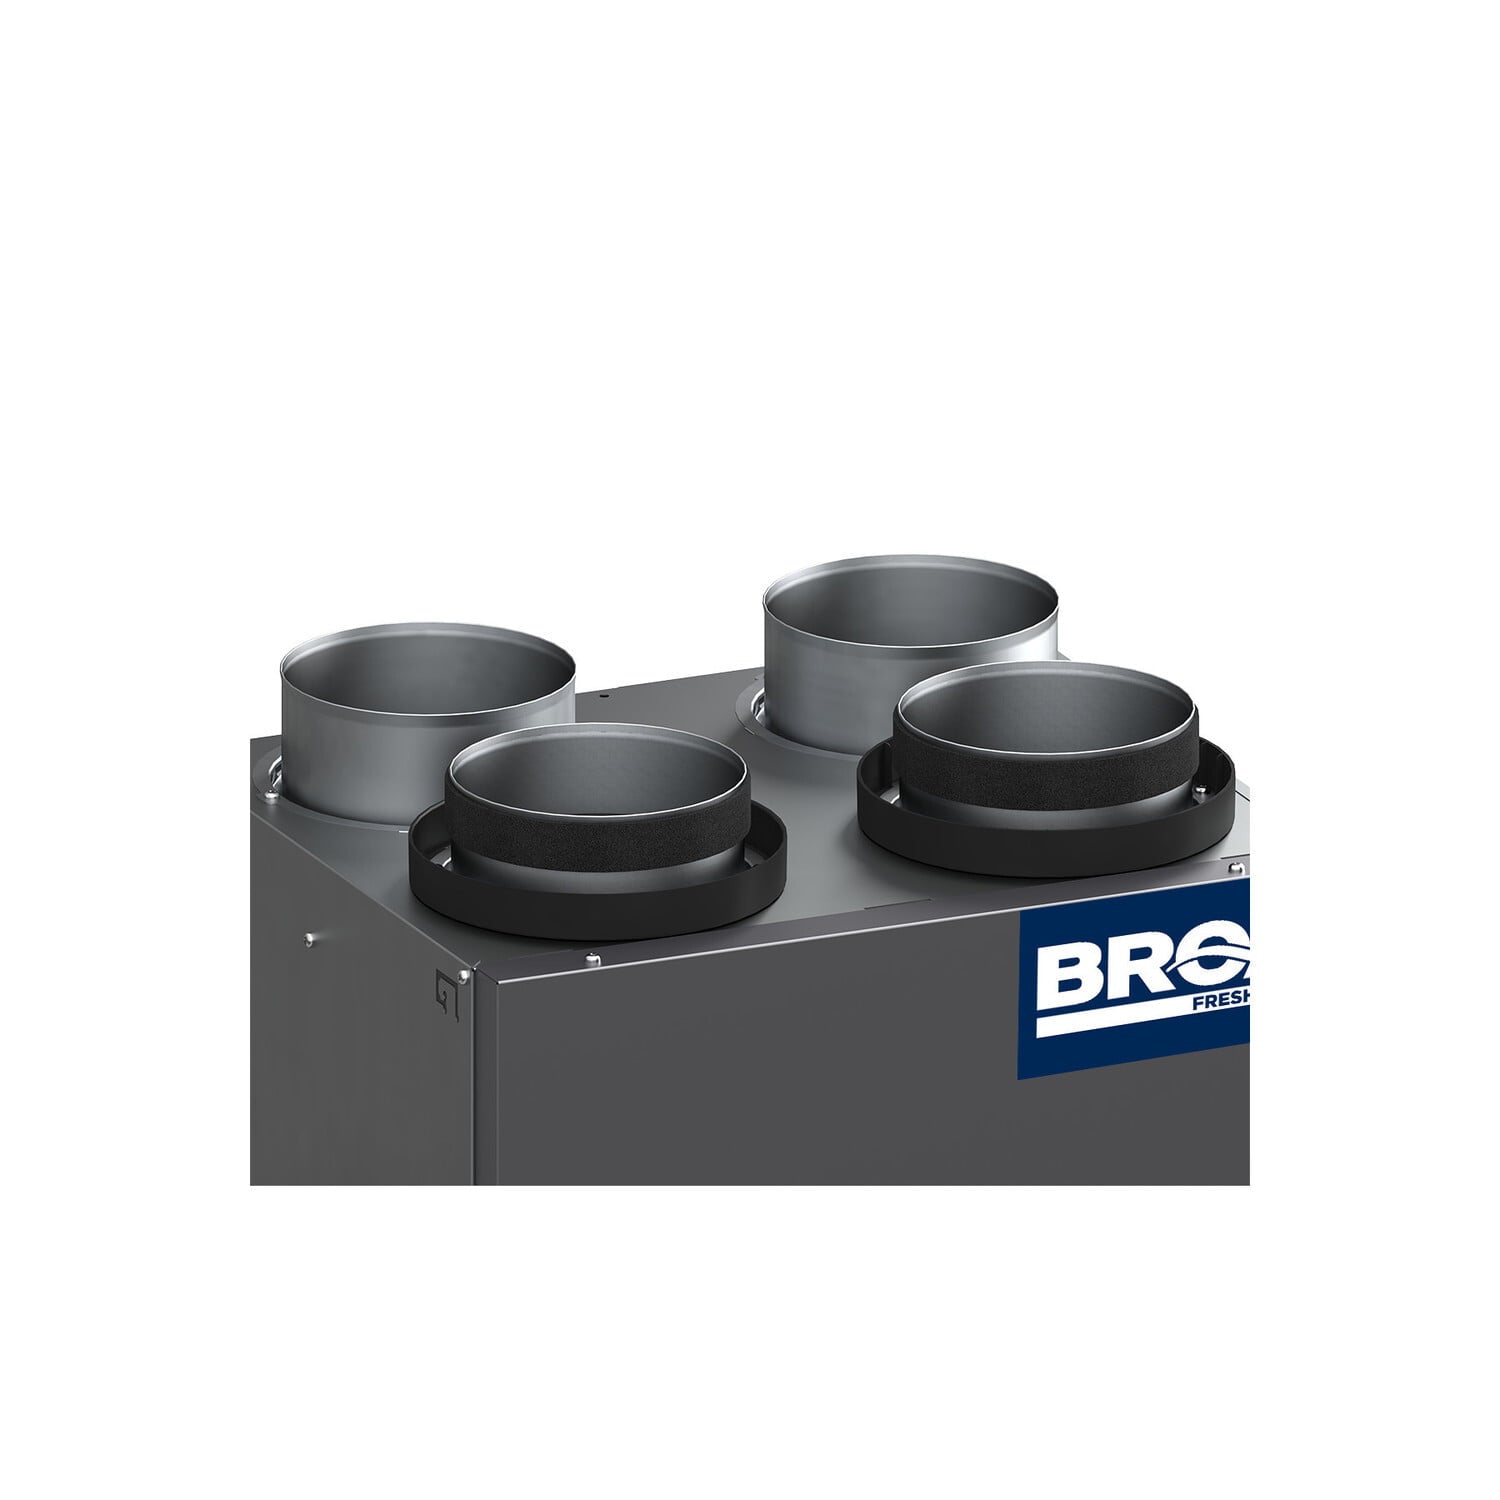 Broan B110H65RT Advanced Touchscreen Control